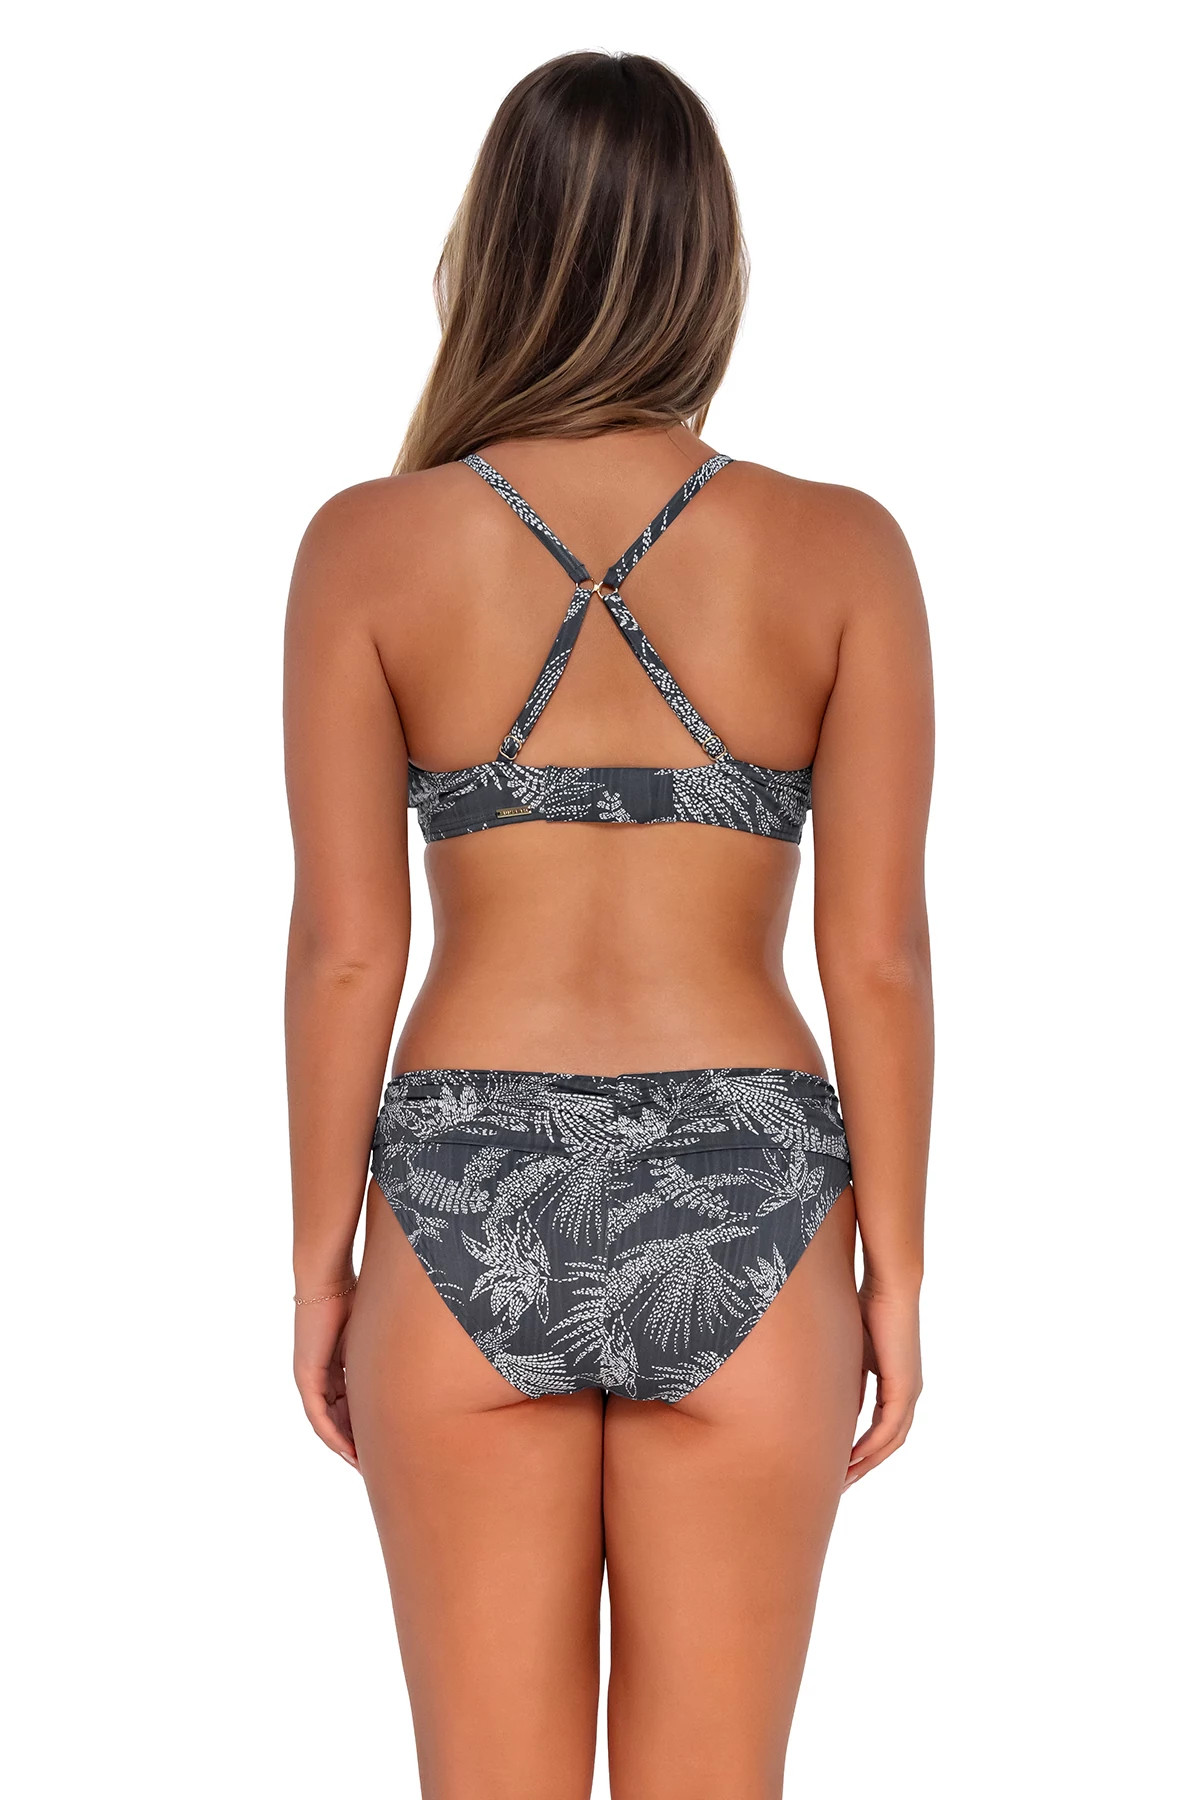 FANFARE SEAGRASS TEXTURE Kauai Keyhole Bralette Bikini Top (D+ Cup) image number 3